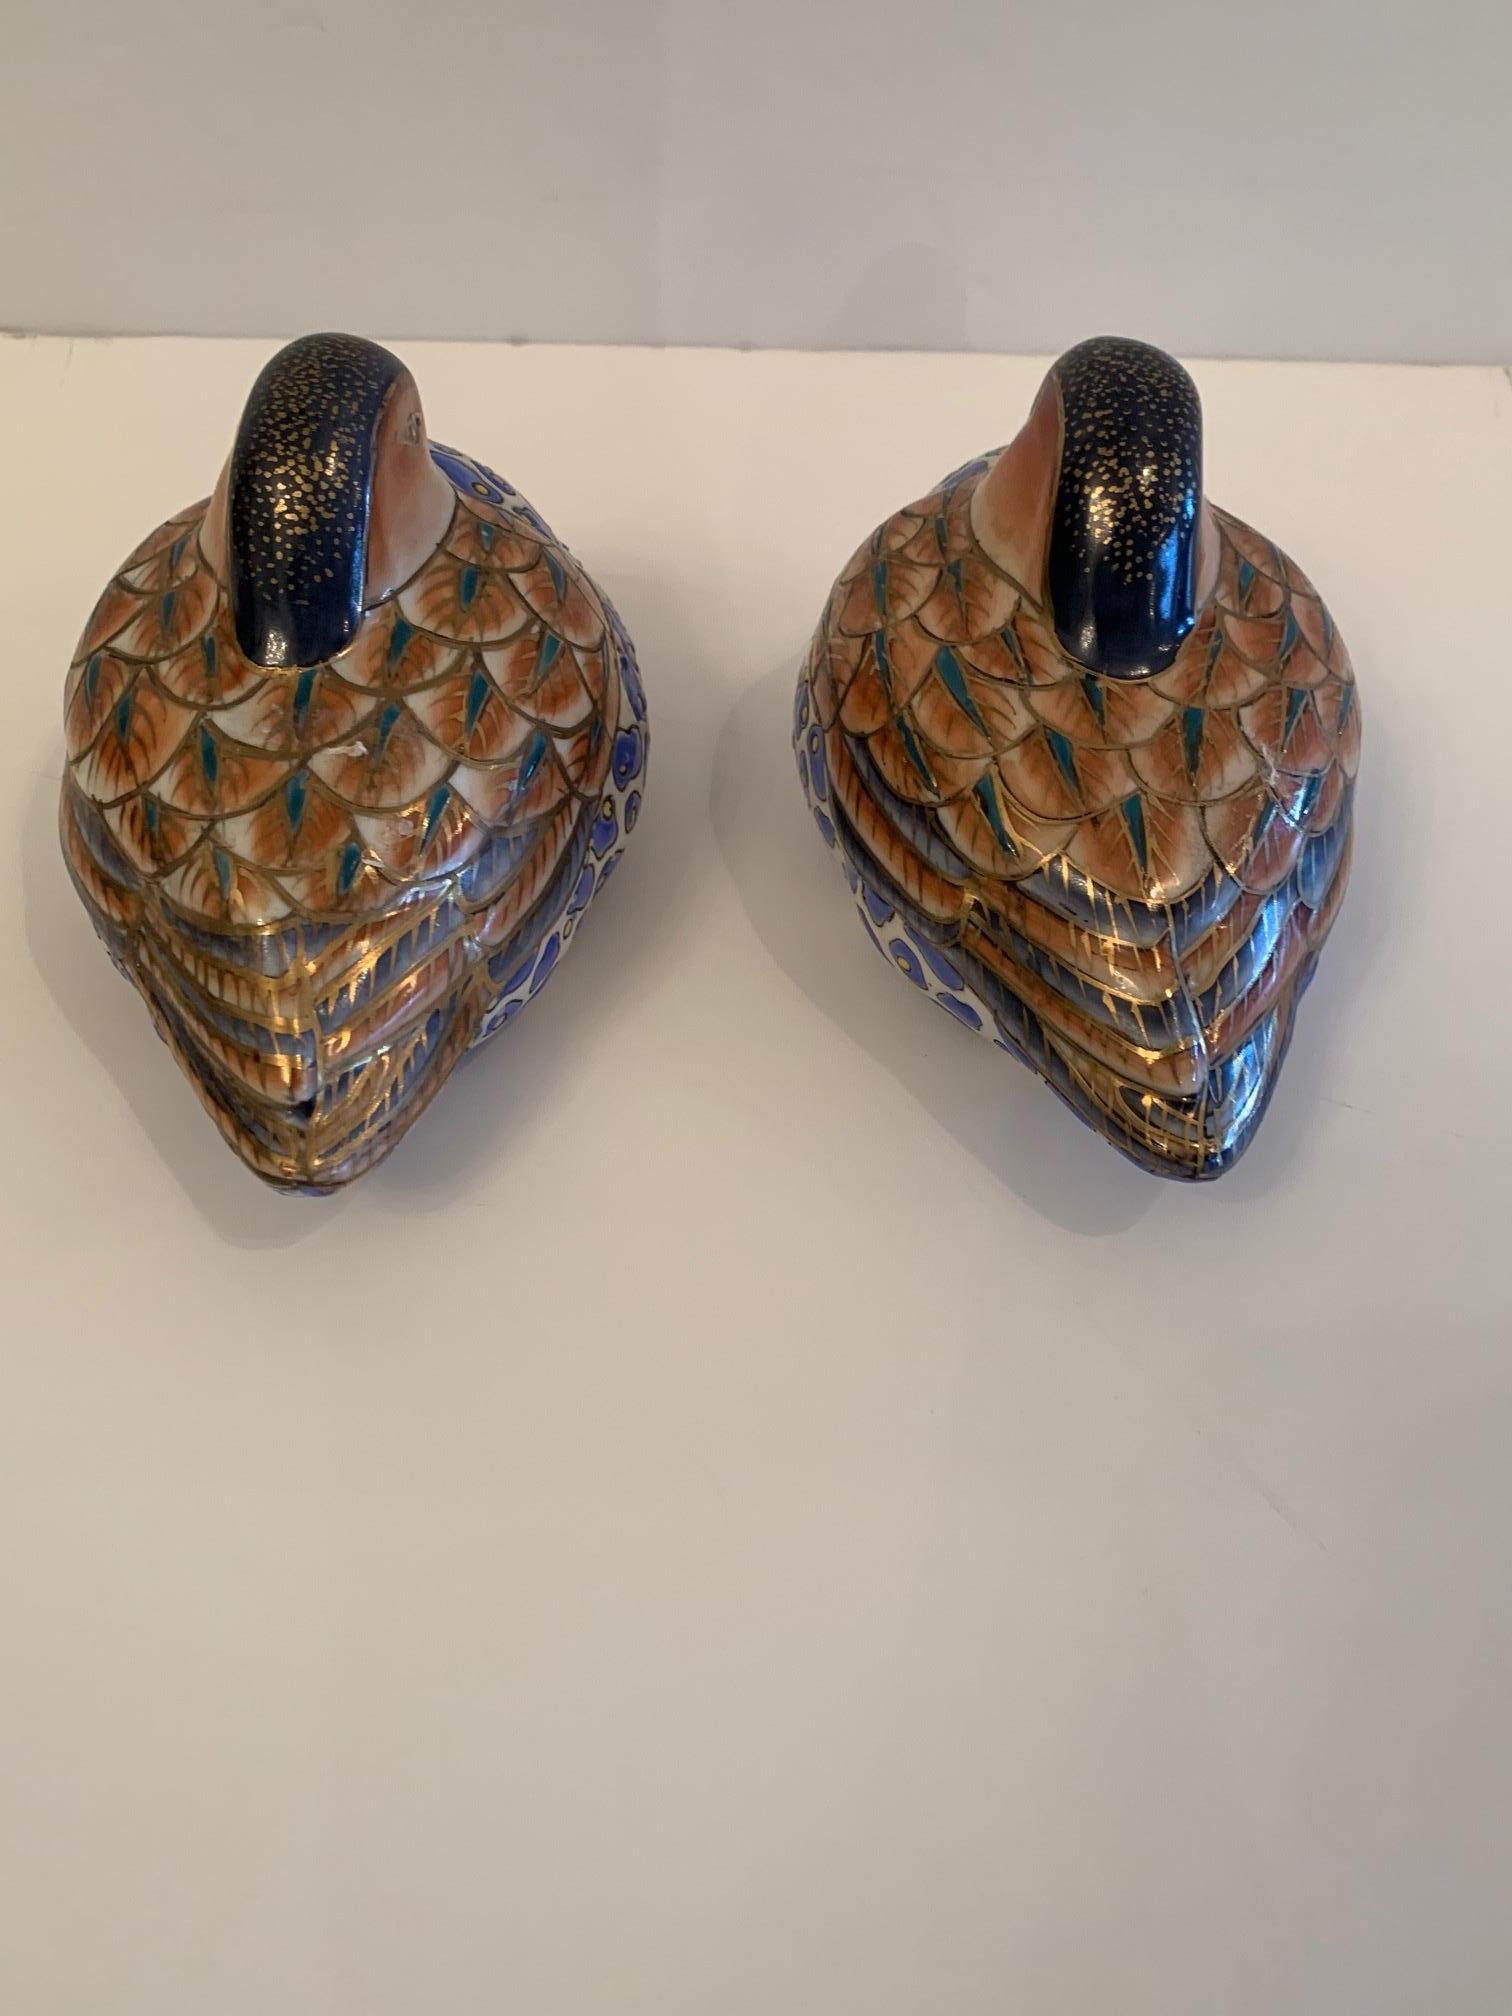 Chinese Export Darling Pair of Imari Style Porcelain Birds